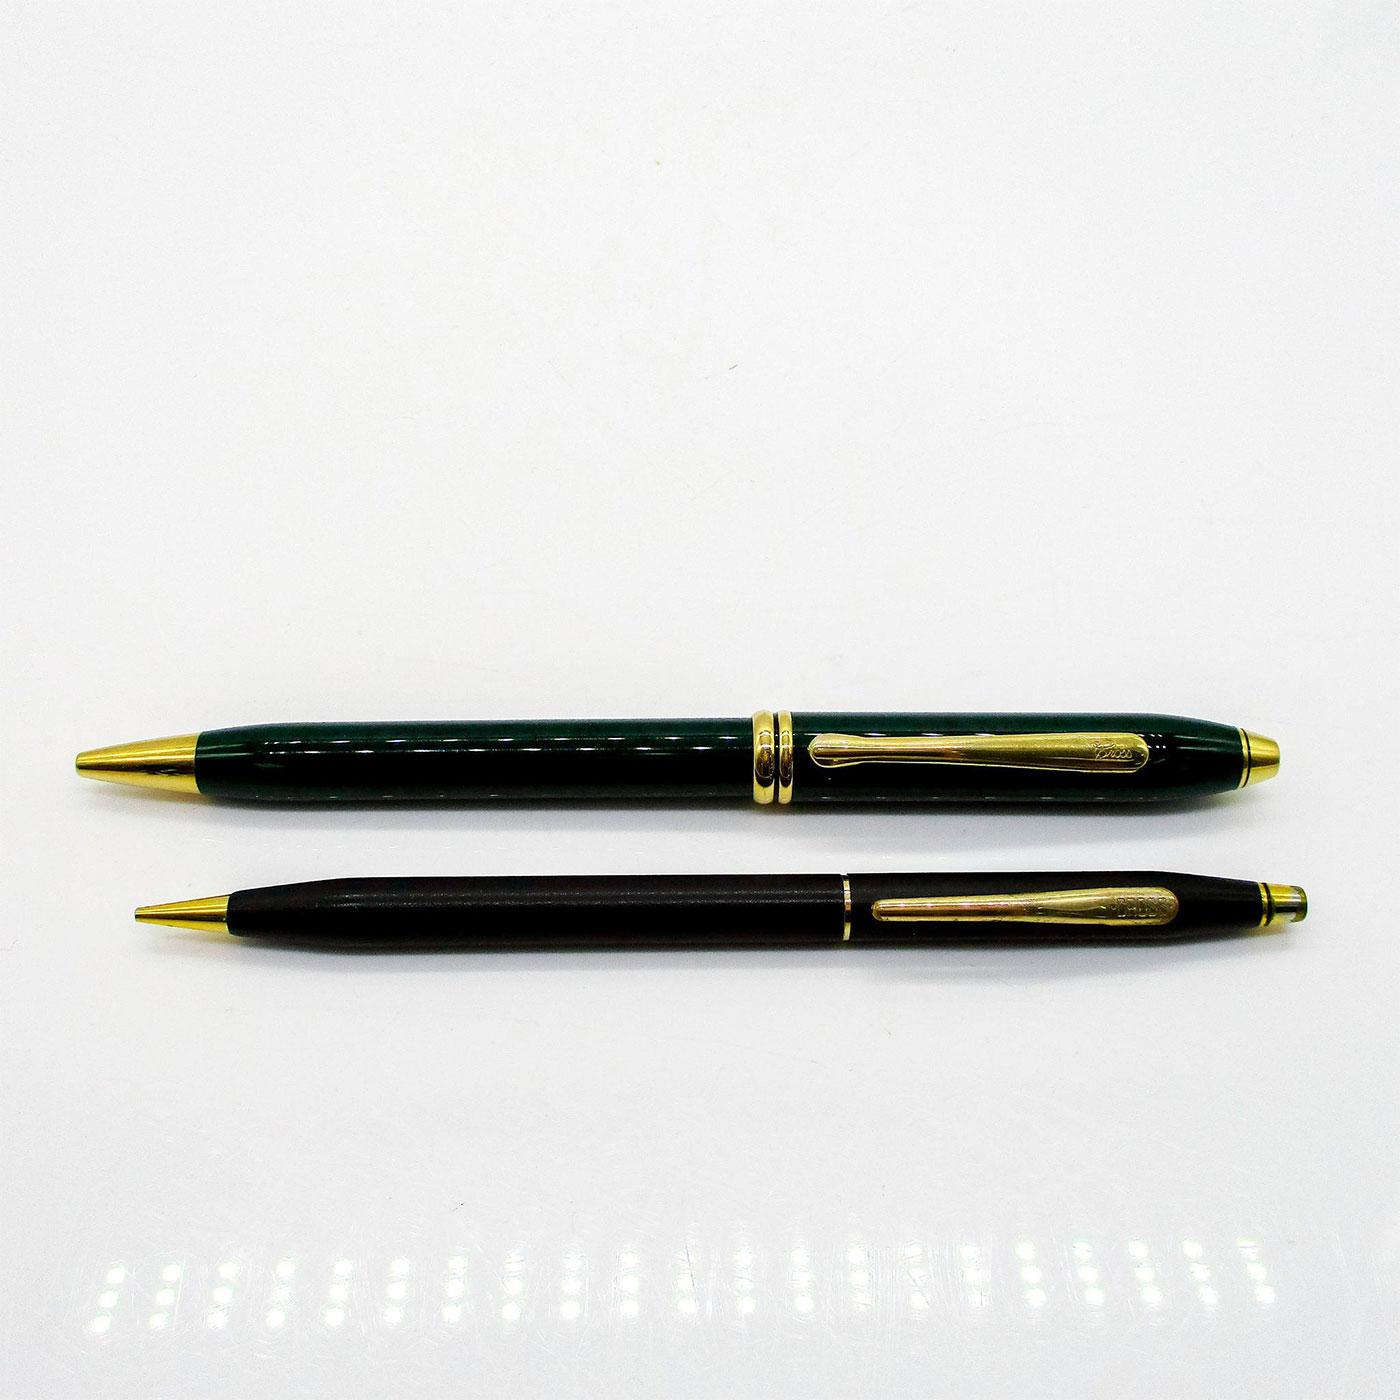 2 Vintage Cross Writing Utensils, 1 Pen, 1 Mechanical Pencil